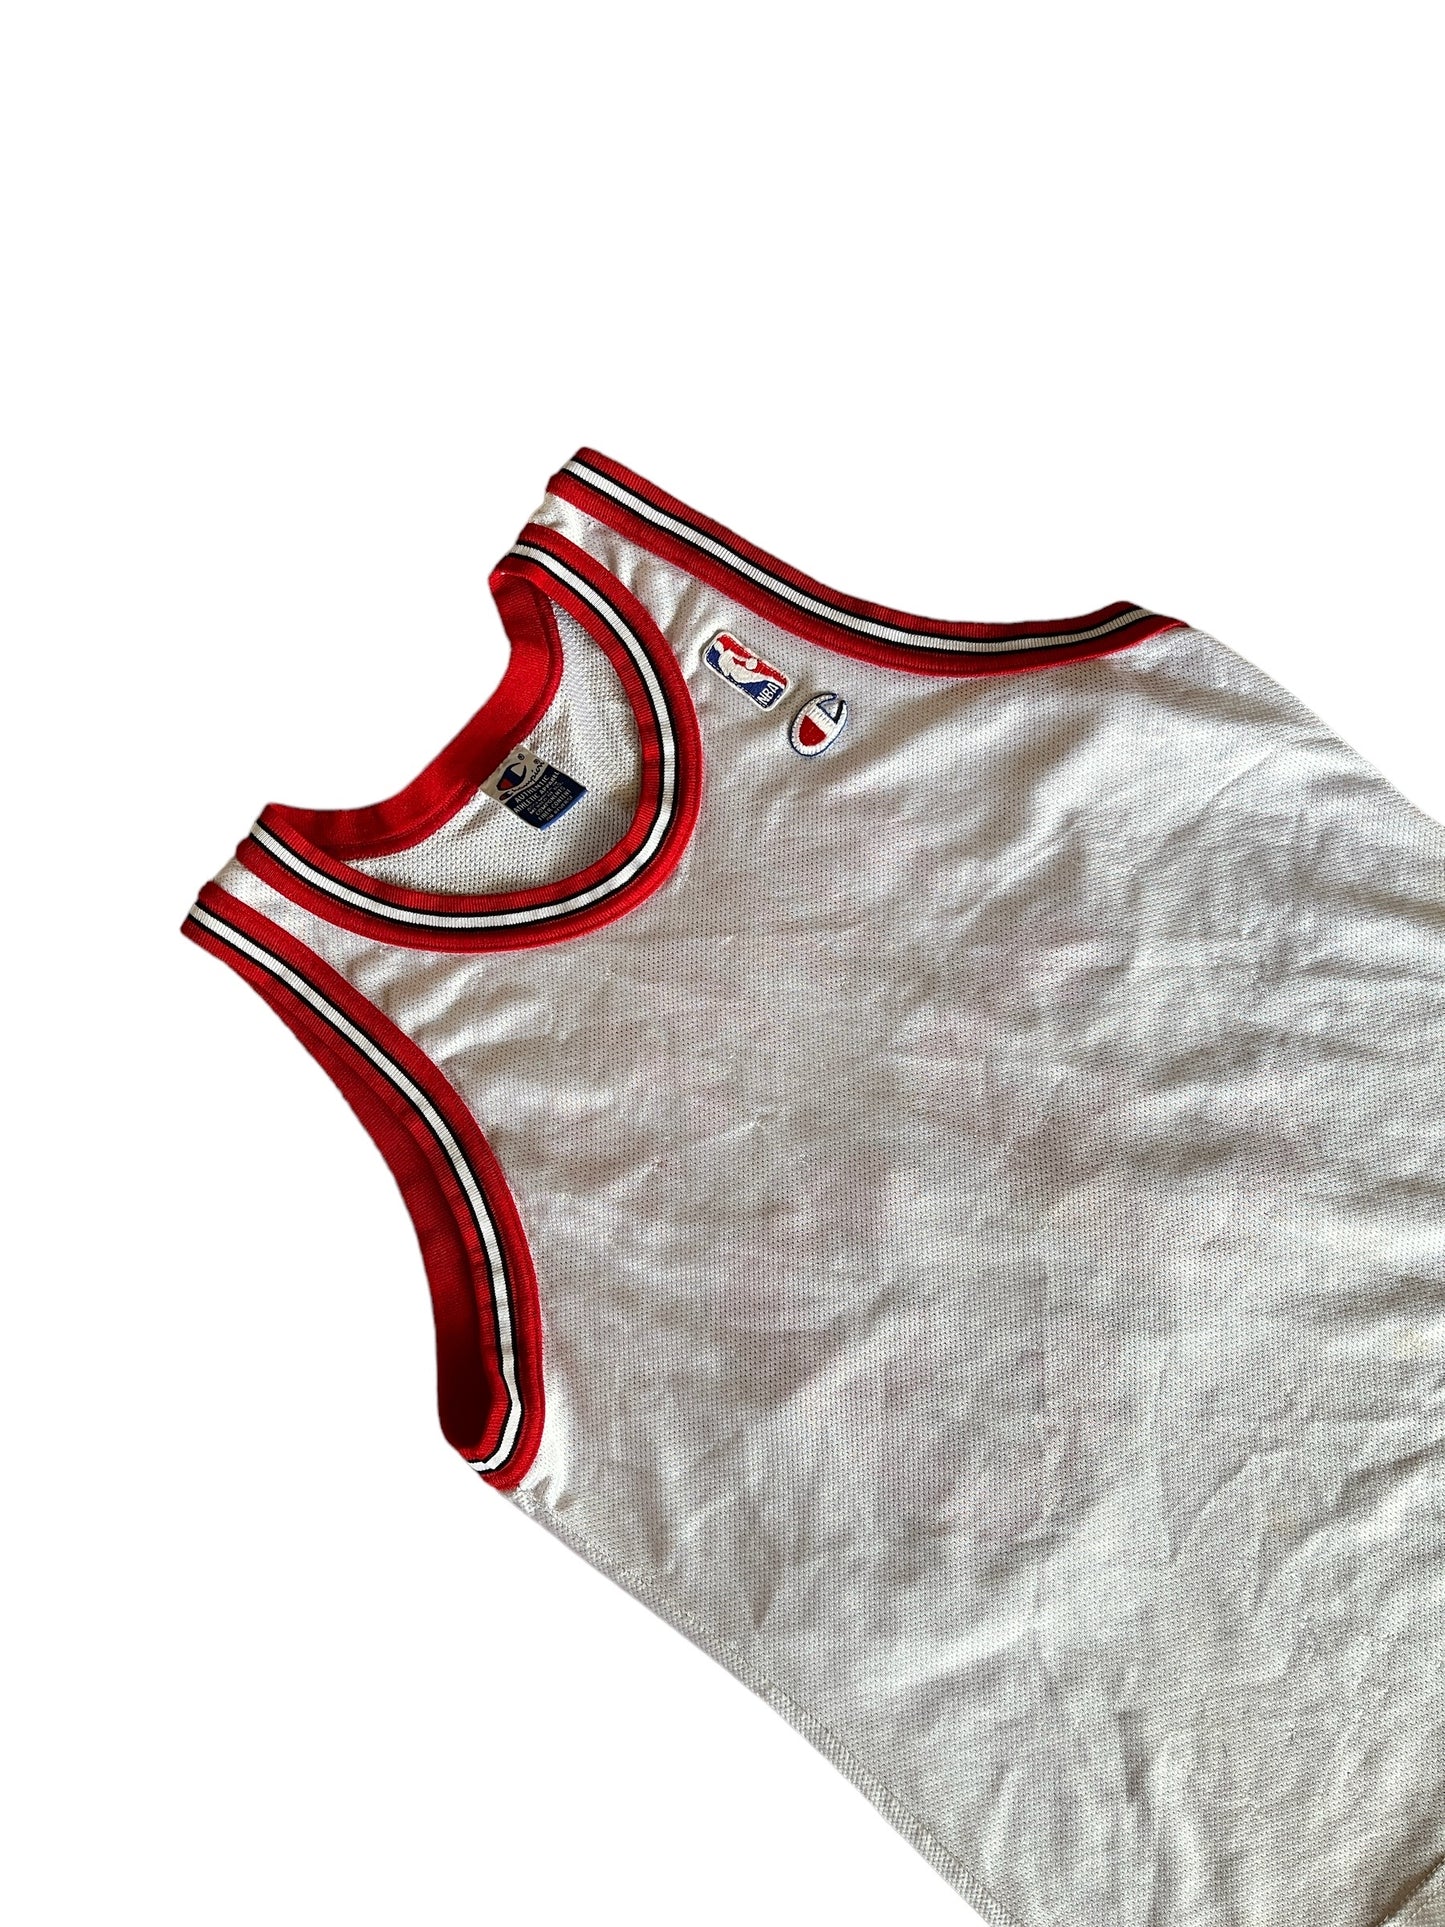 Vintage Champion "Scottie Pippen" Bulls Jersey